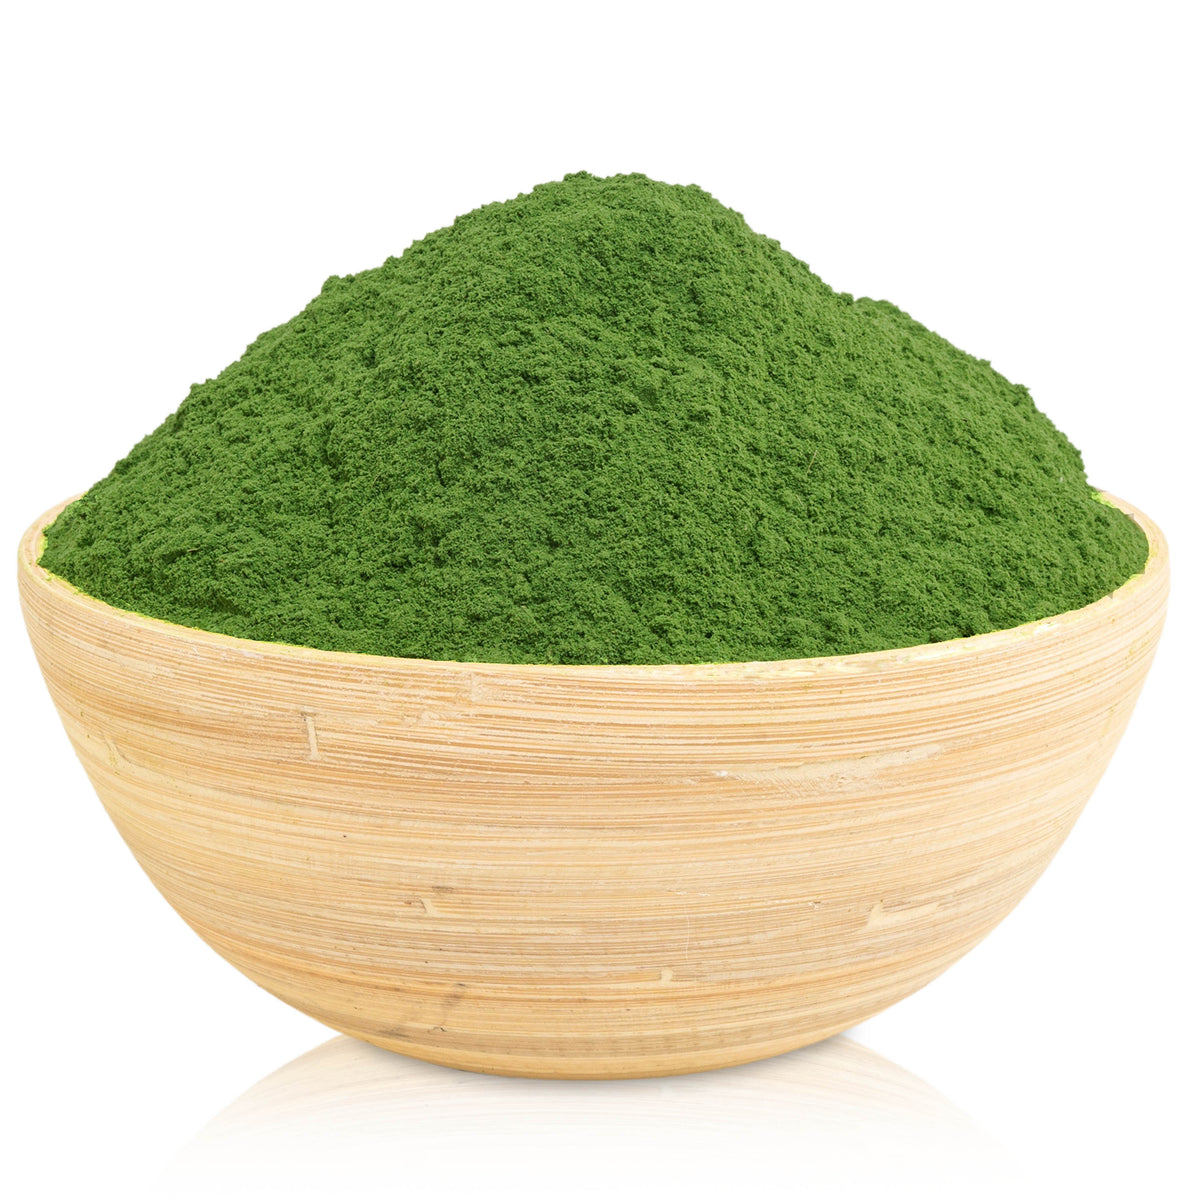 Moringa Oleifera leaf powder